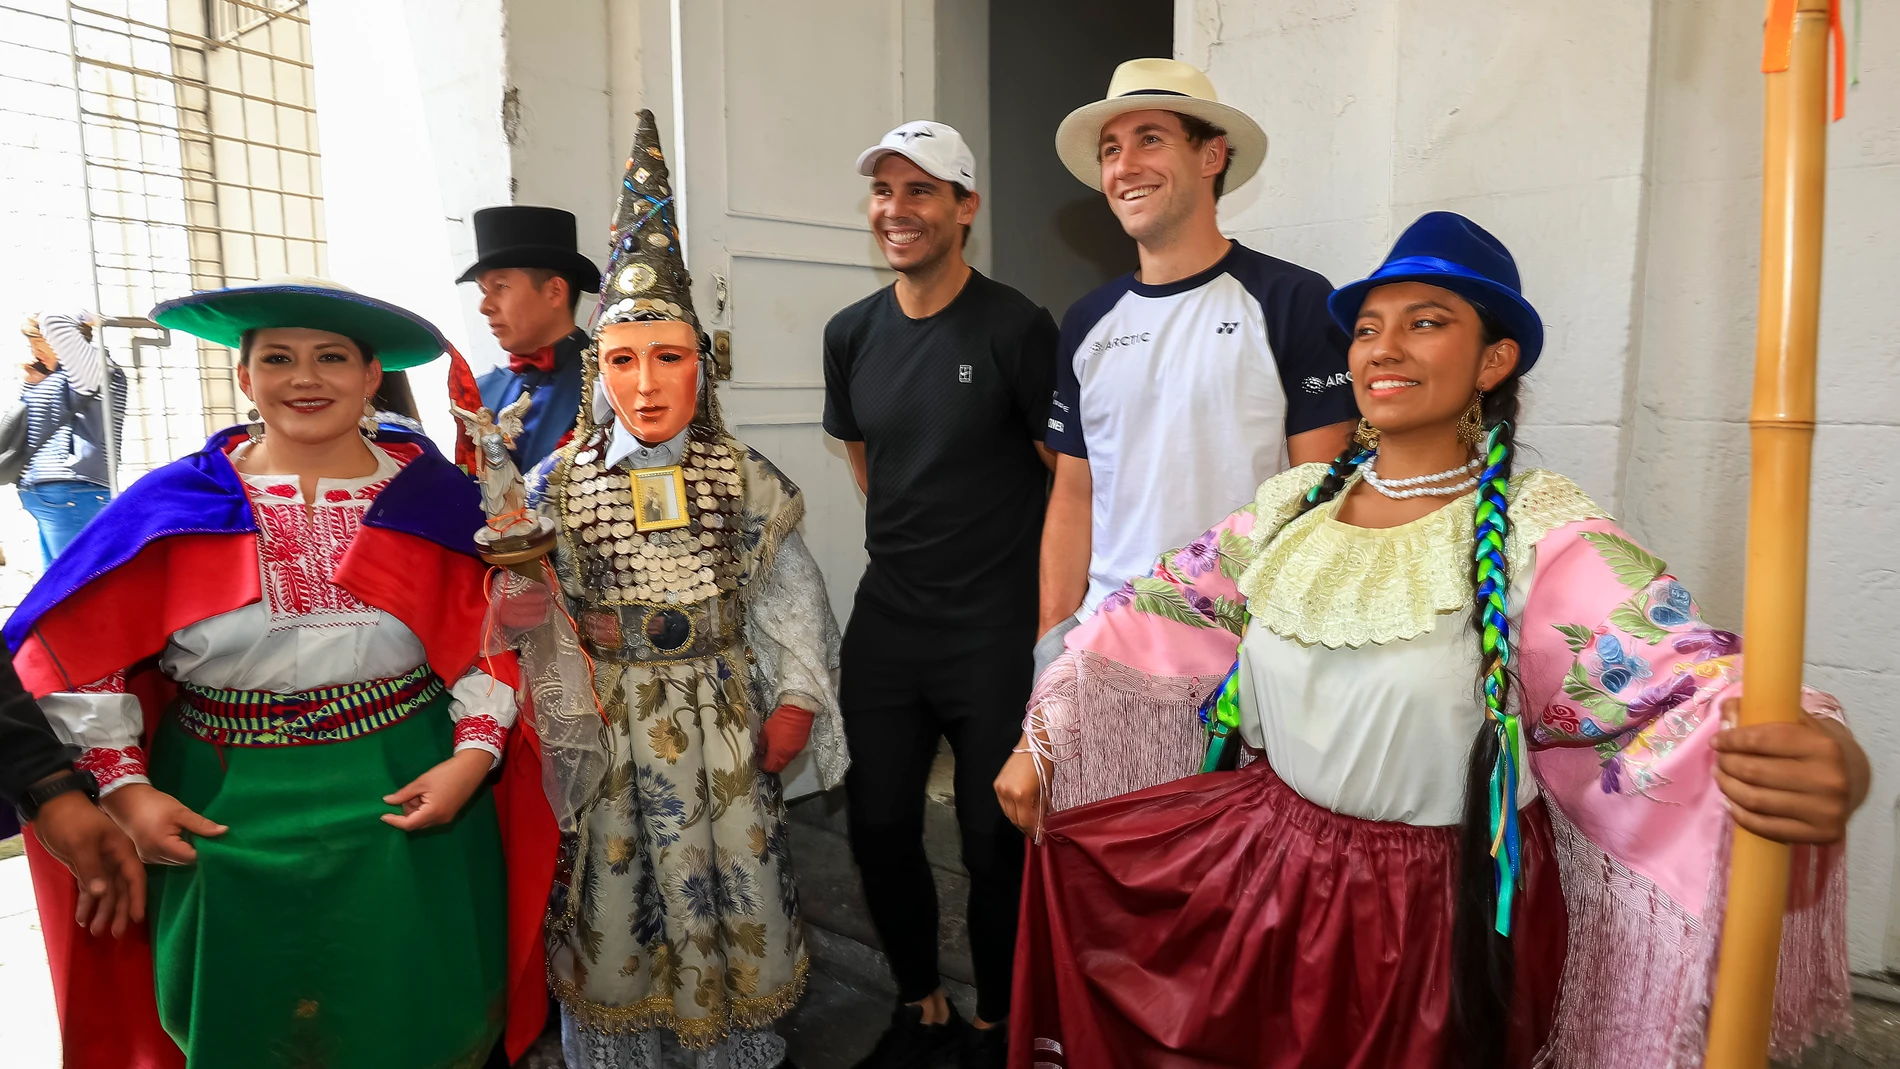 Rafal Nadal y Casper Ruud, en Quito